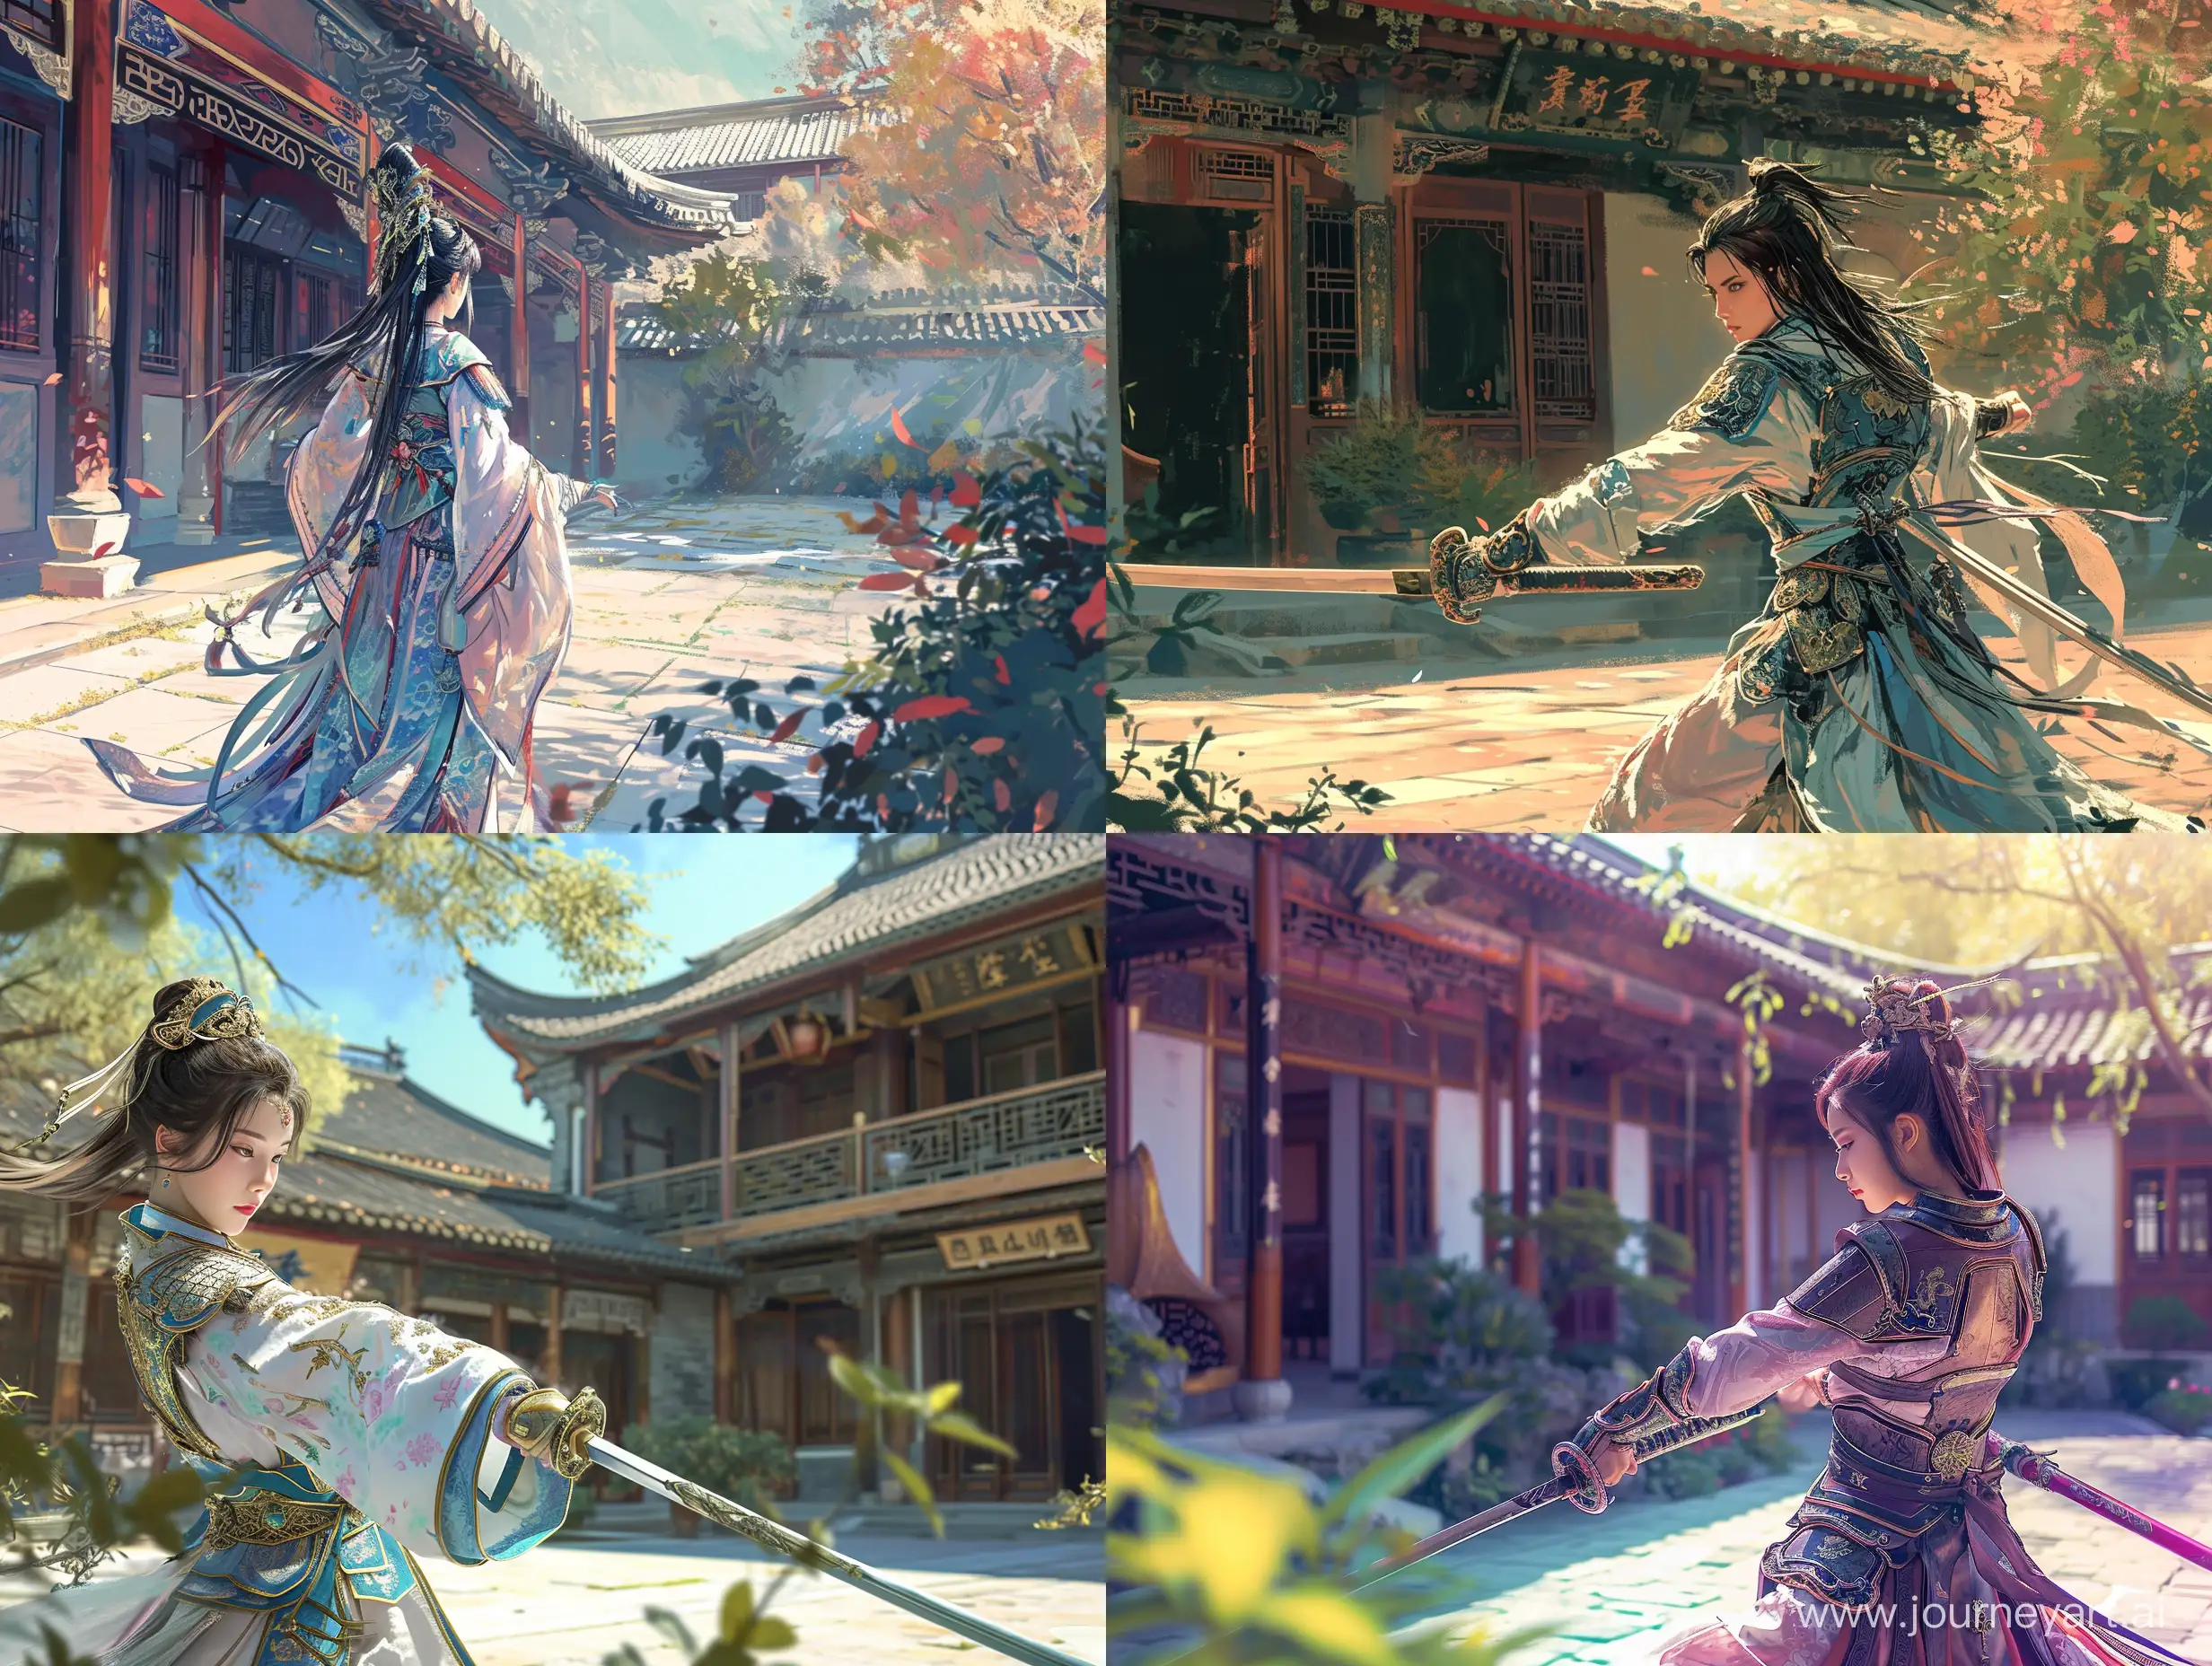 Elegant-Swordplay-in-Ancient-Courtyard-Chineseinspired-Anime-Art